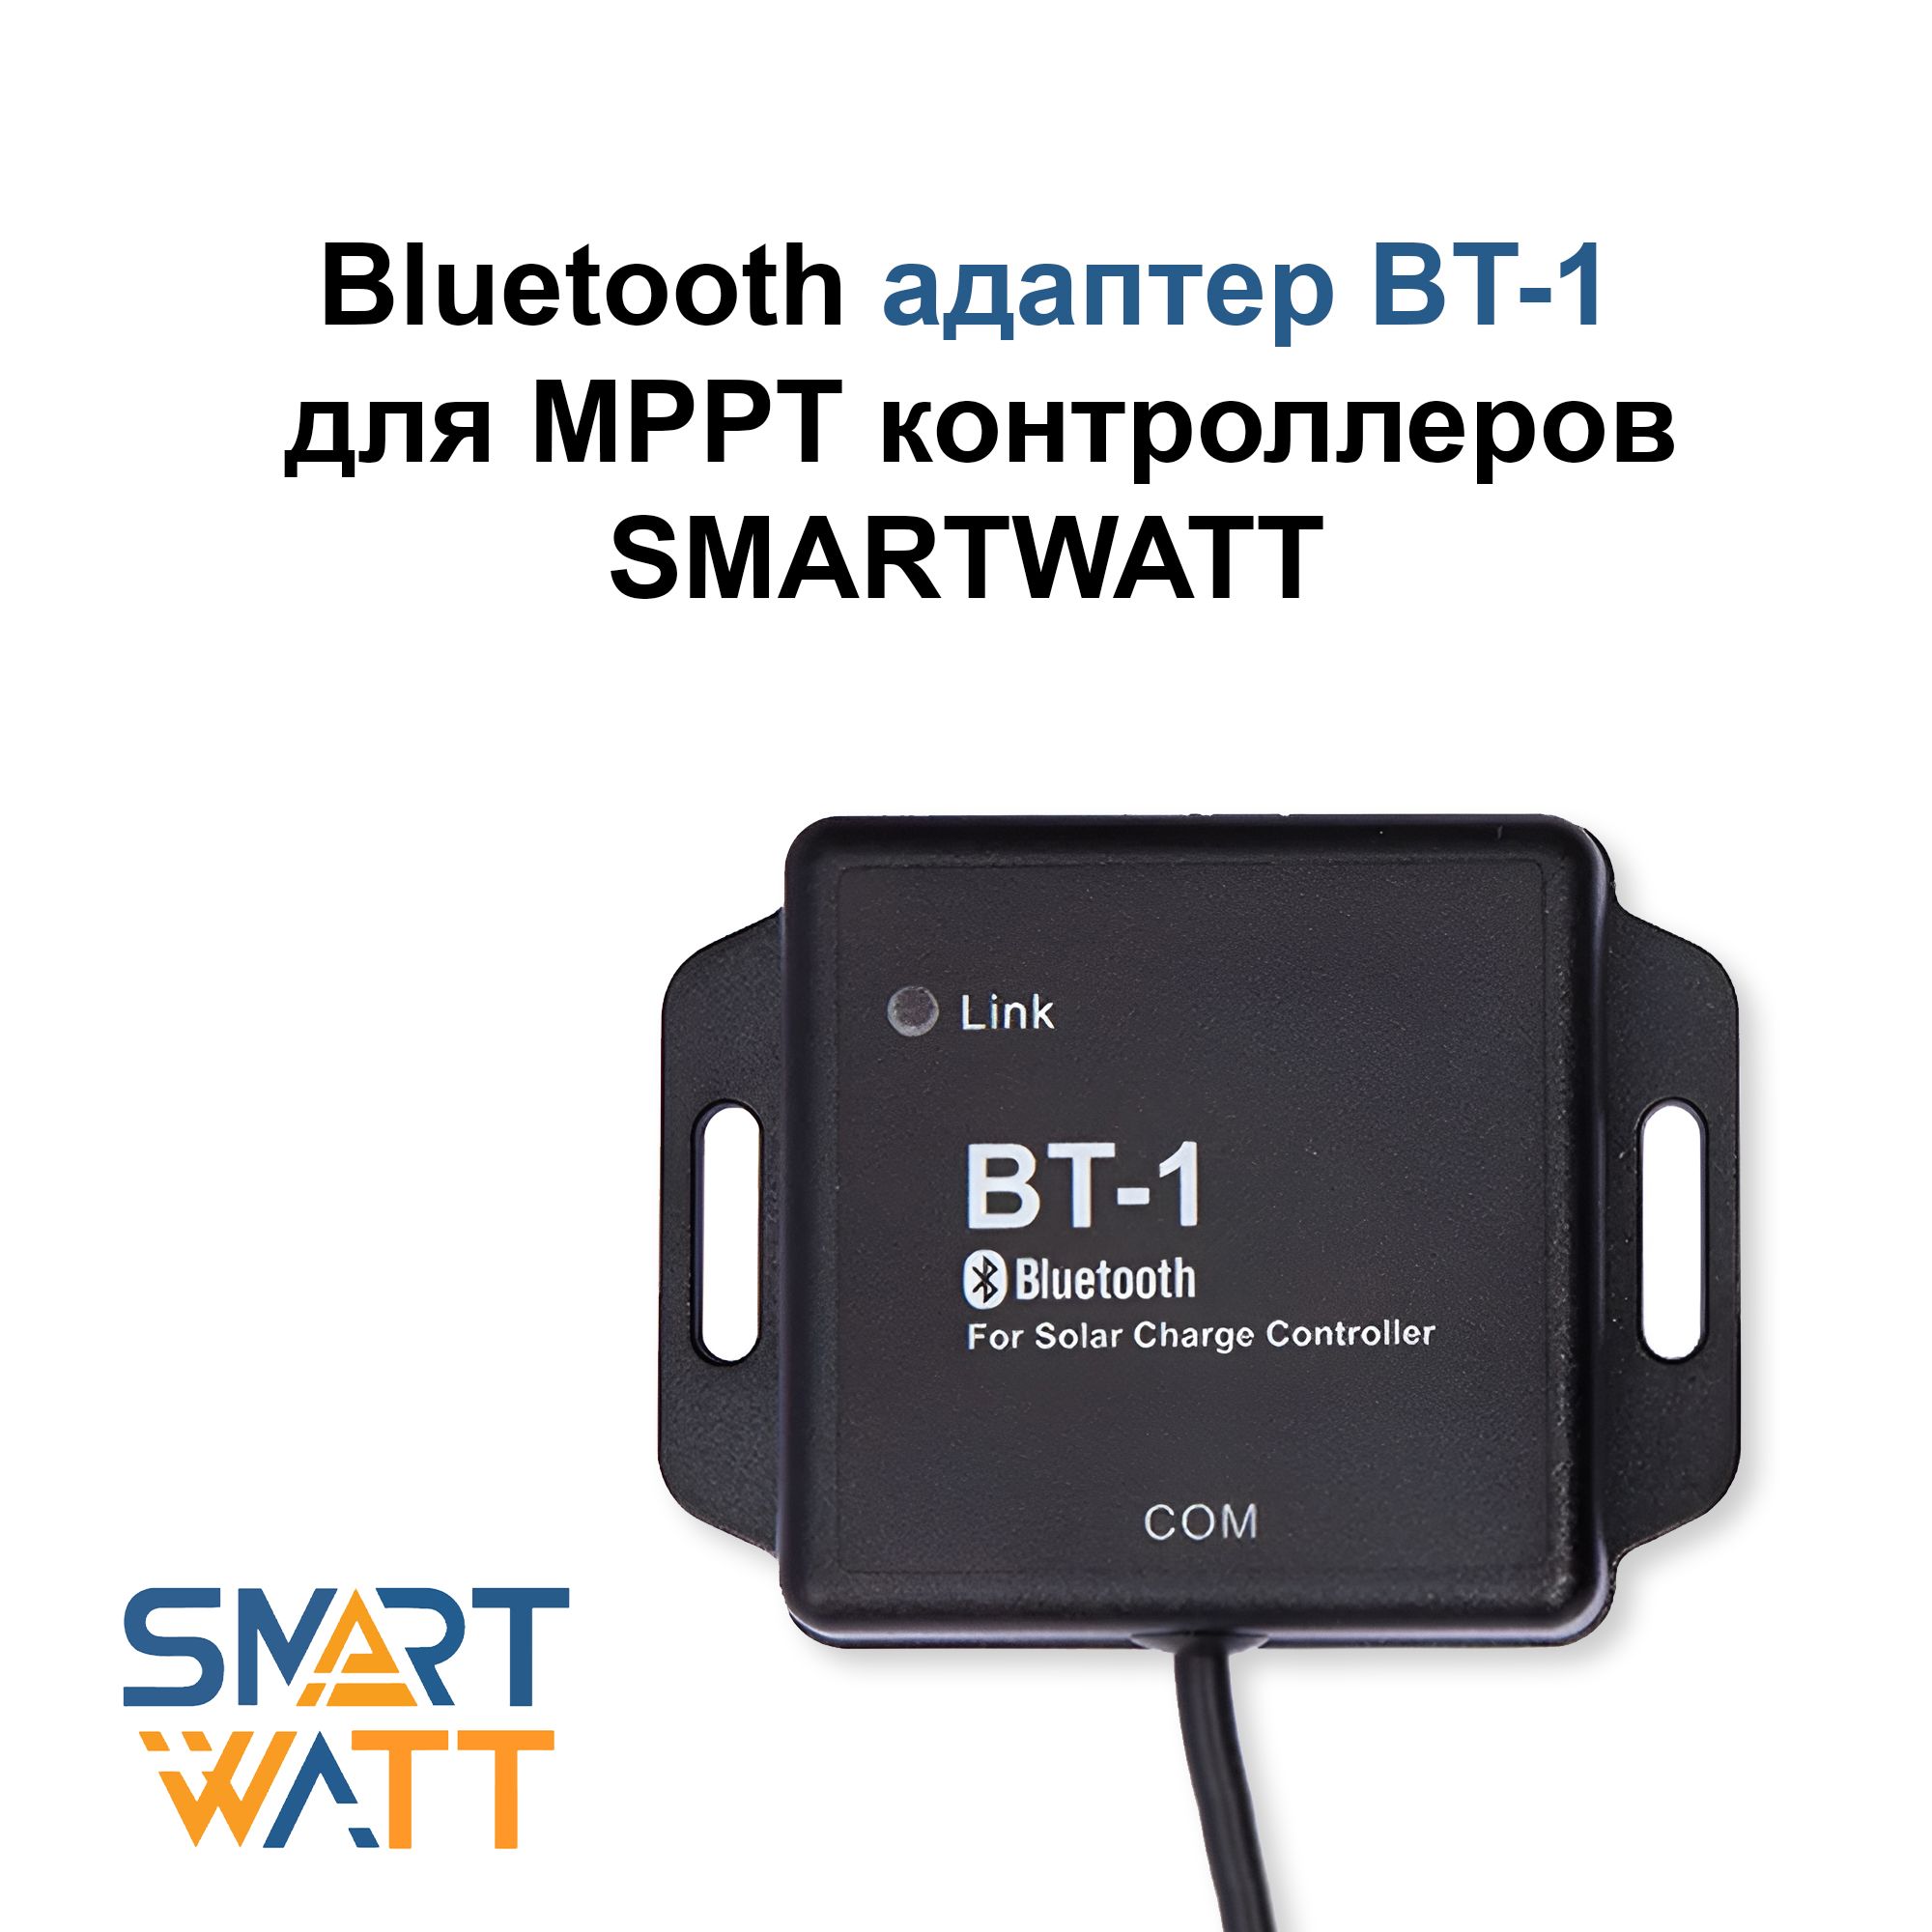 BluetoothадаптерBT-1дляMPPTконтроллеровSMARTWATT